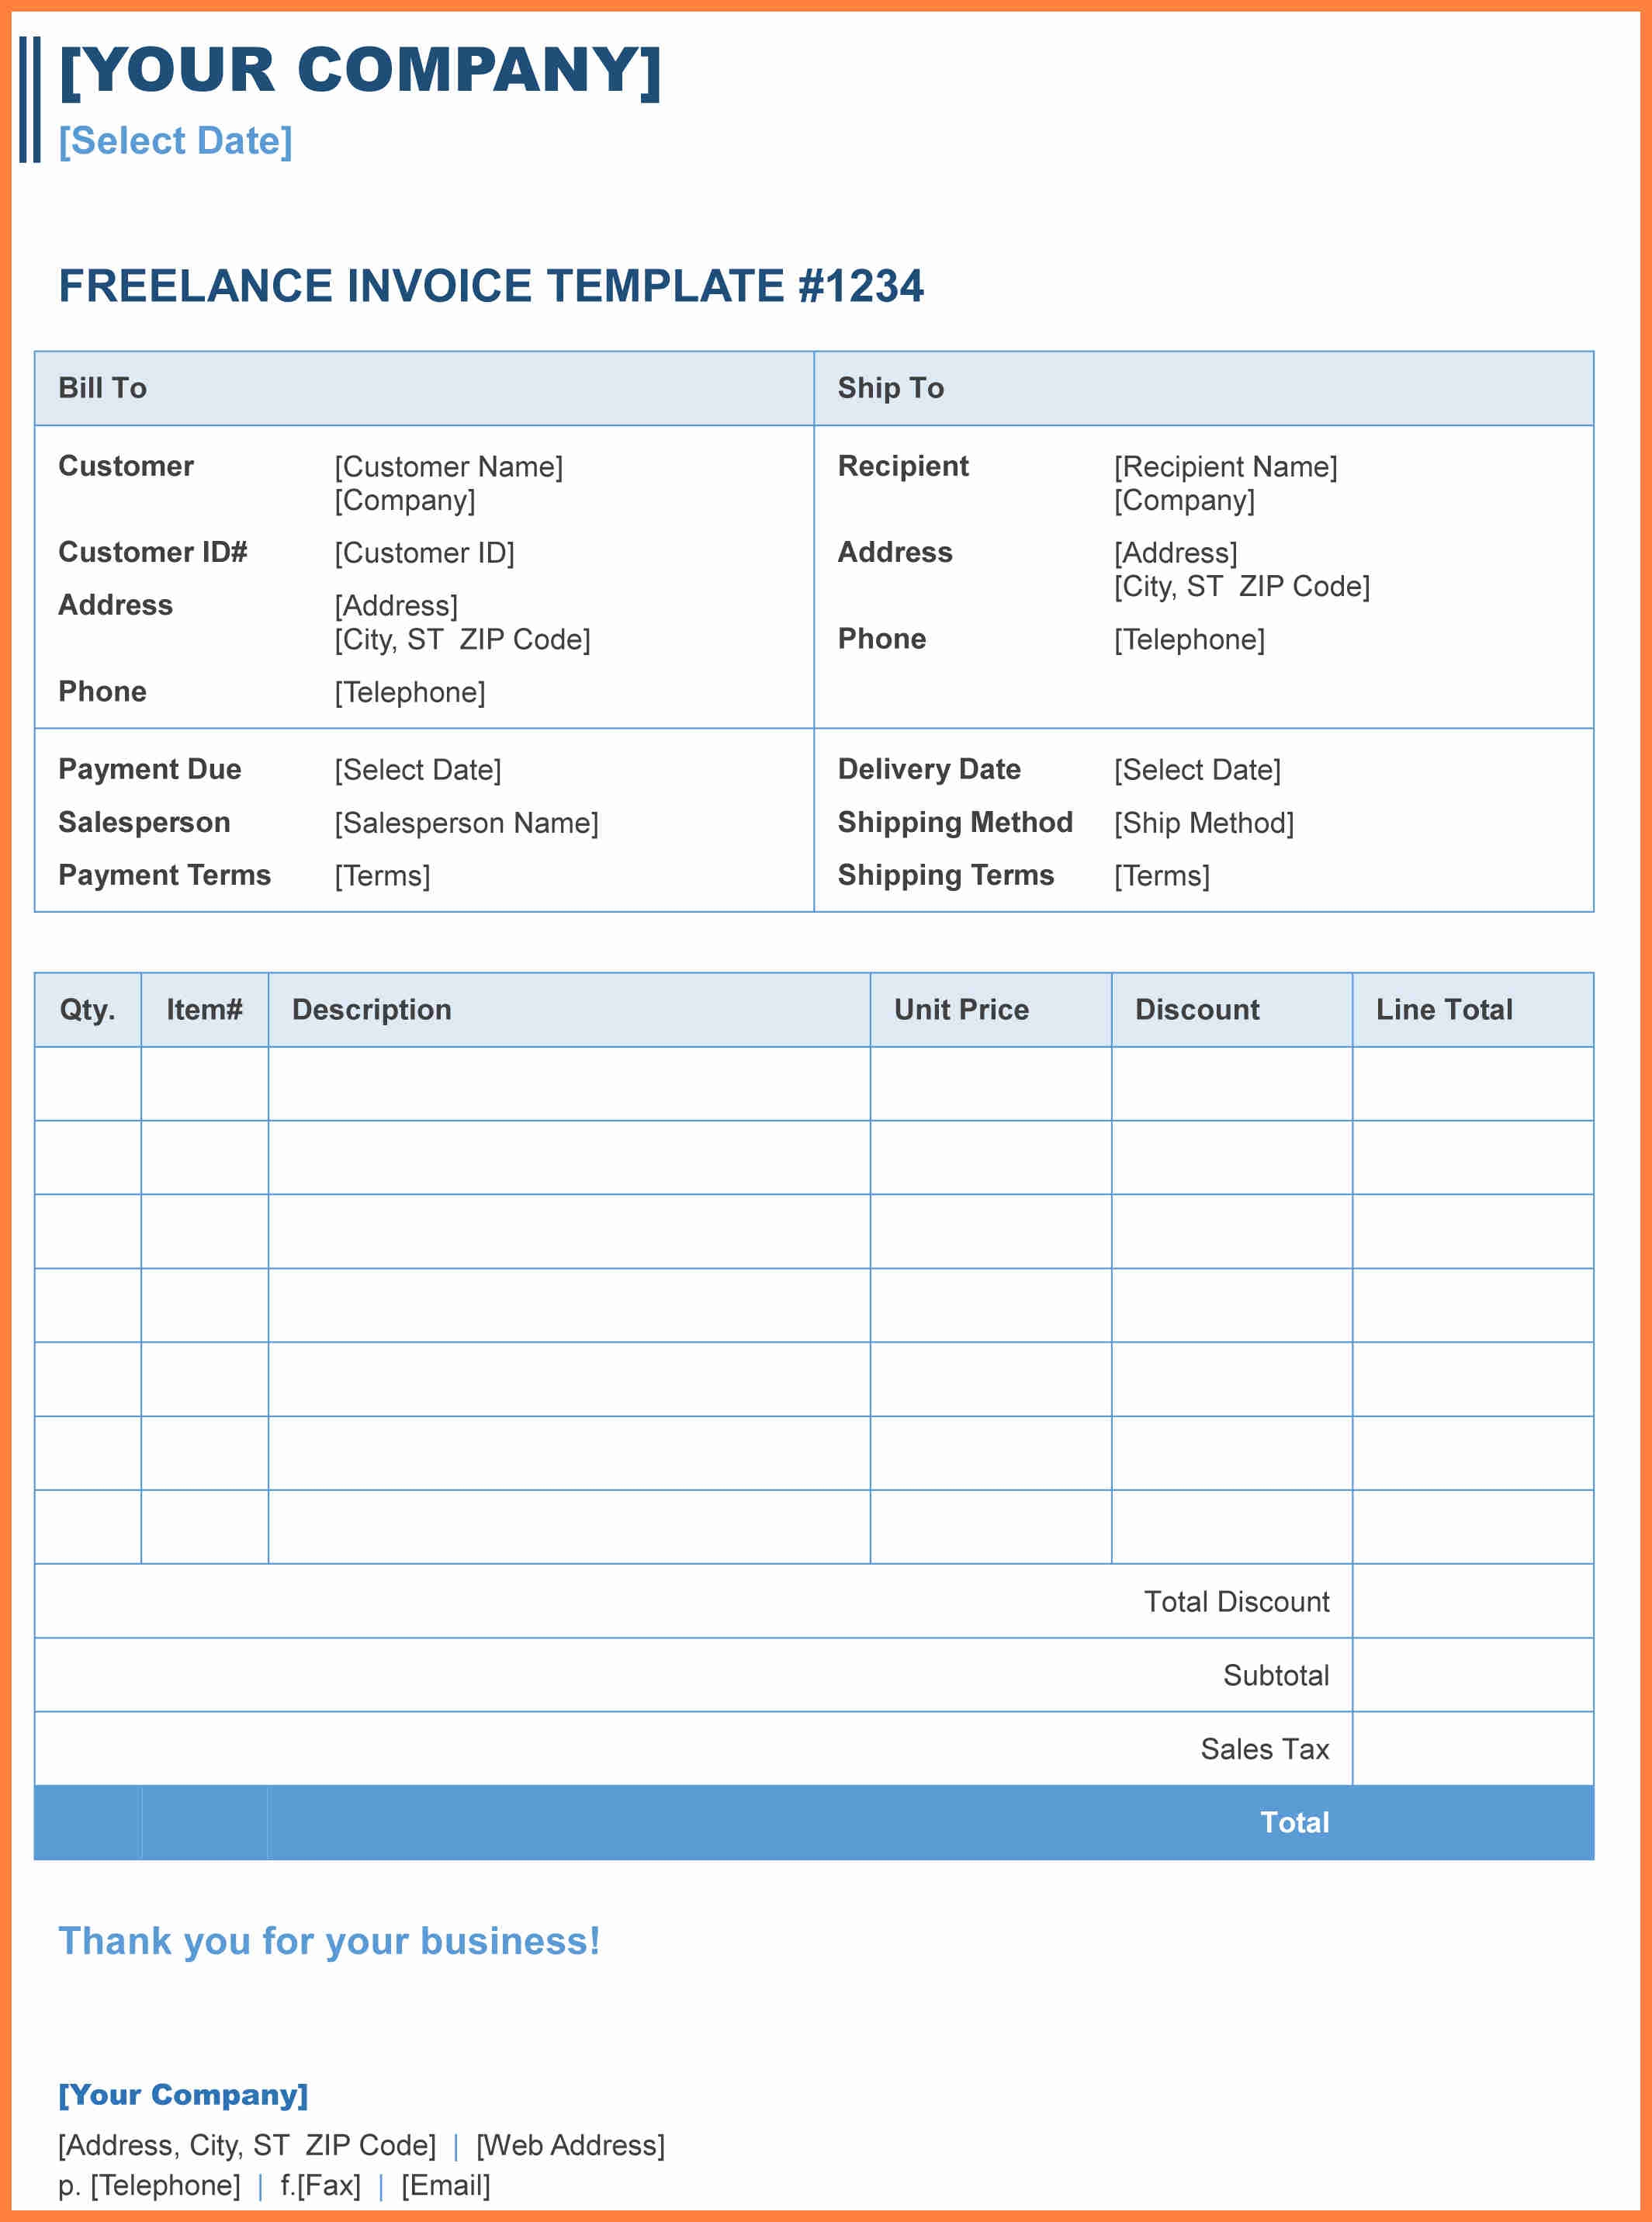 sample invoice template microsoft word 10 freelance invoice template microsoft word appointmentletters 2129 X 2863